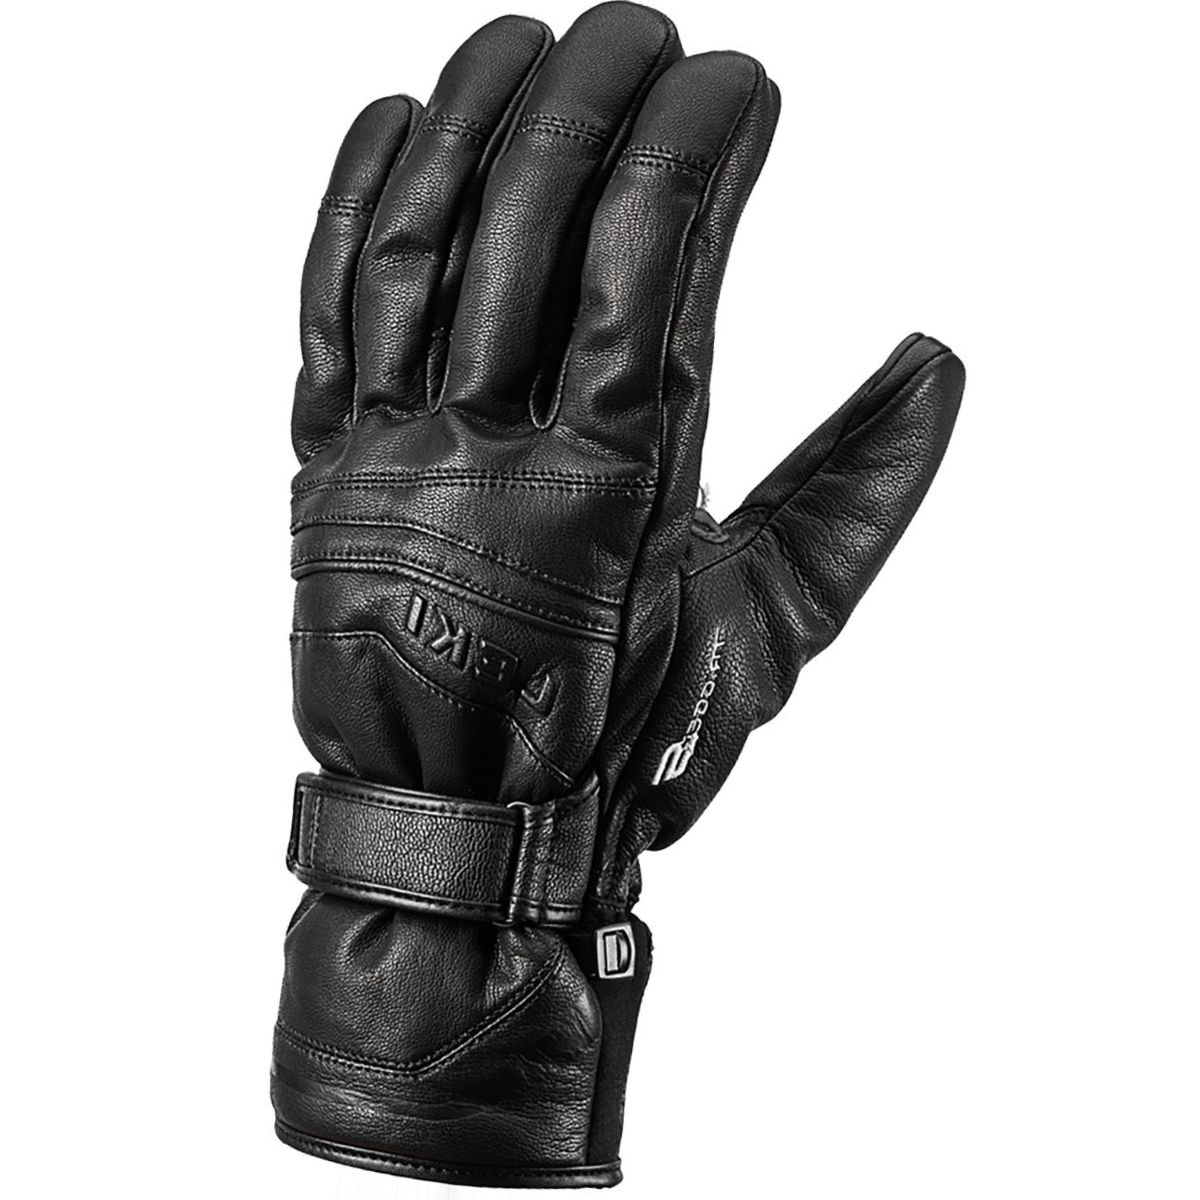 LEKI Fusion S MF Touch Glove - Men's